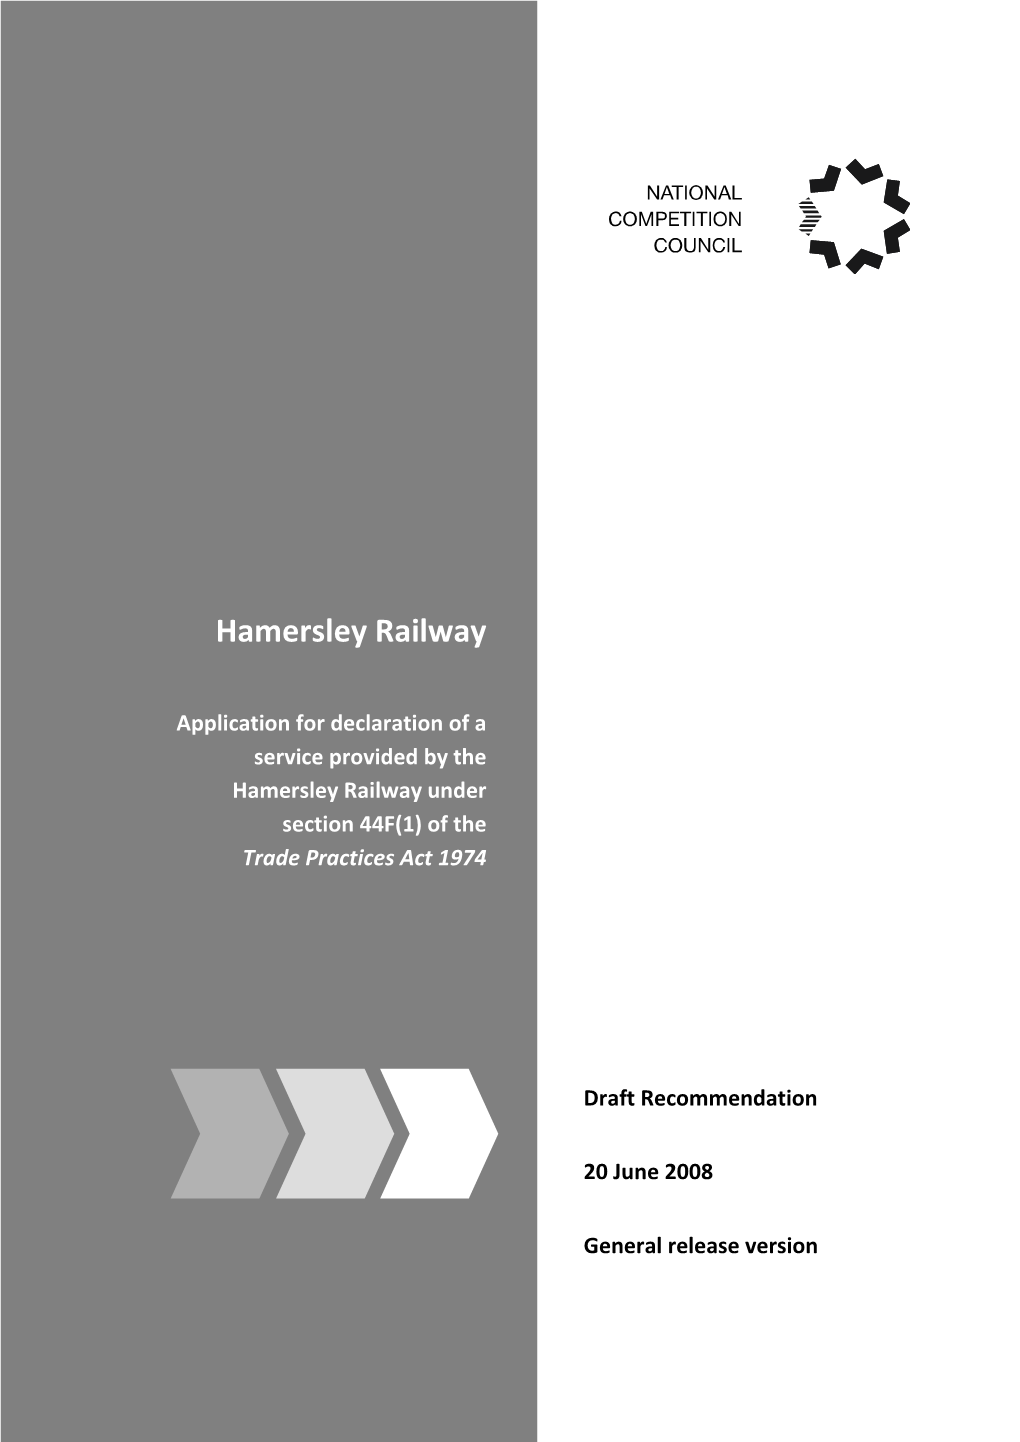 Application for Declaration of the Hamersley Railway, NCC Draft